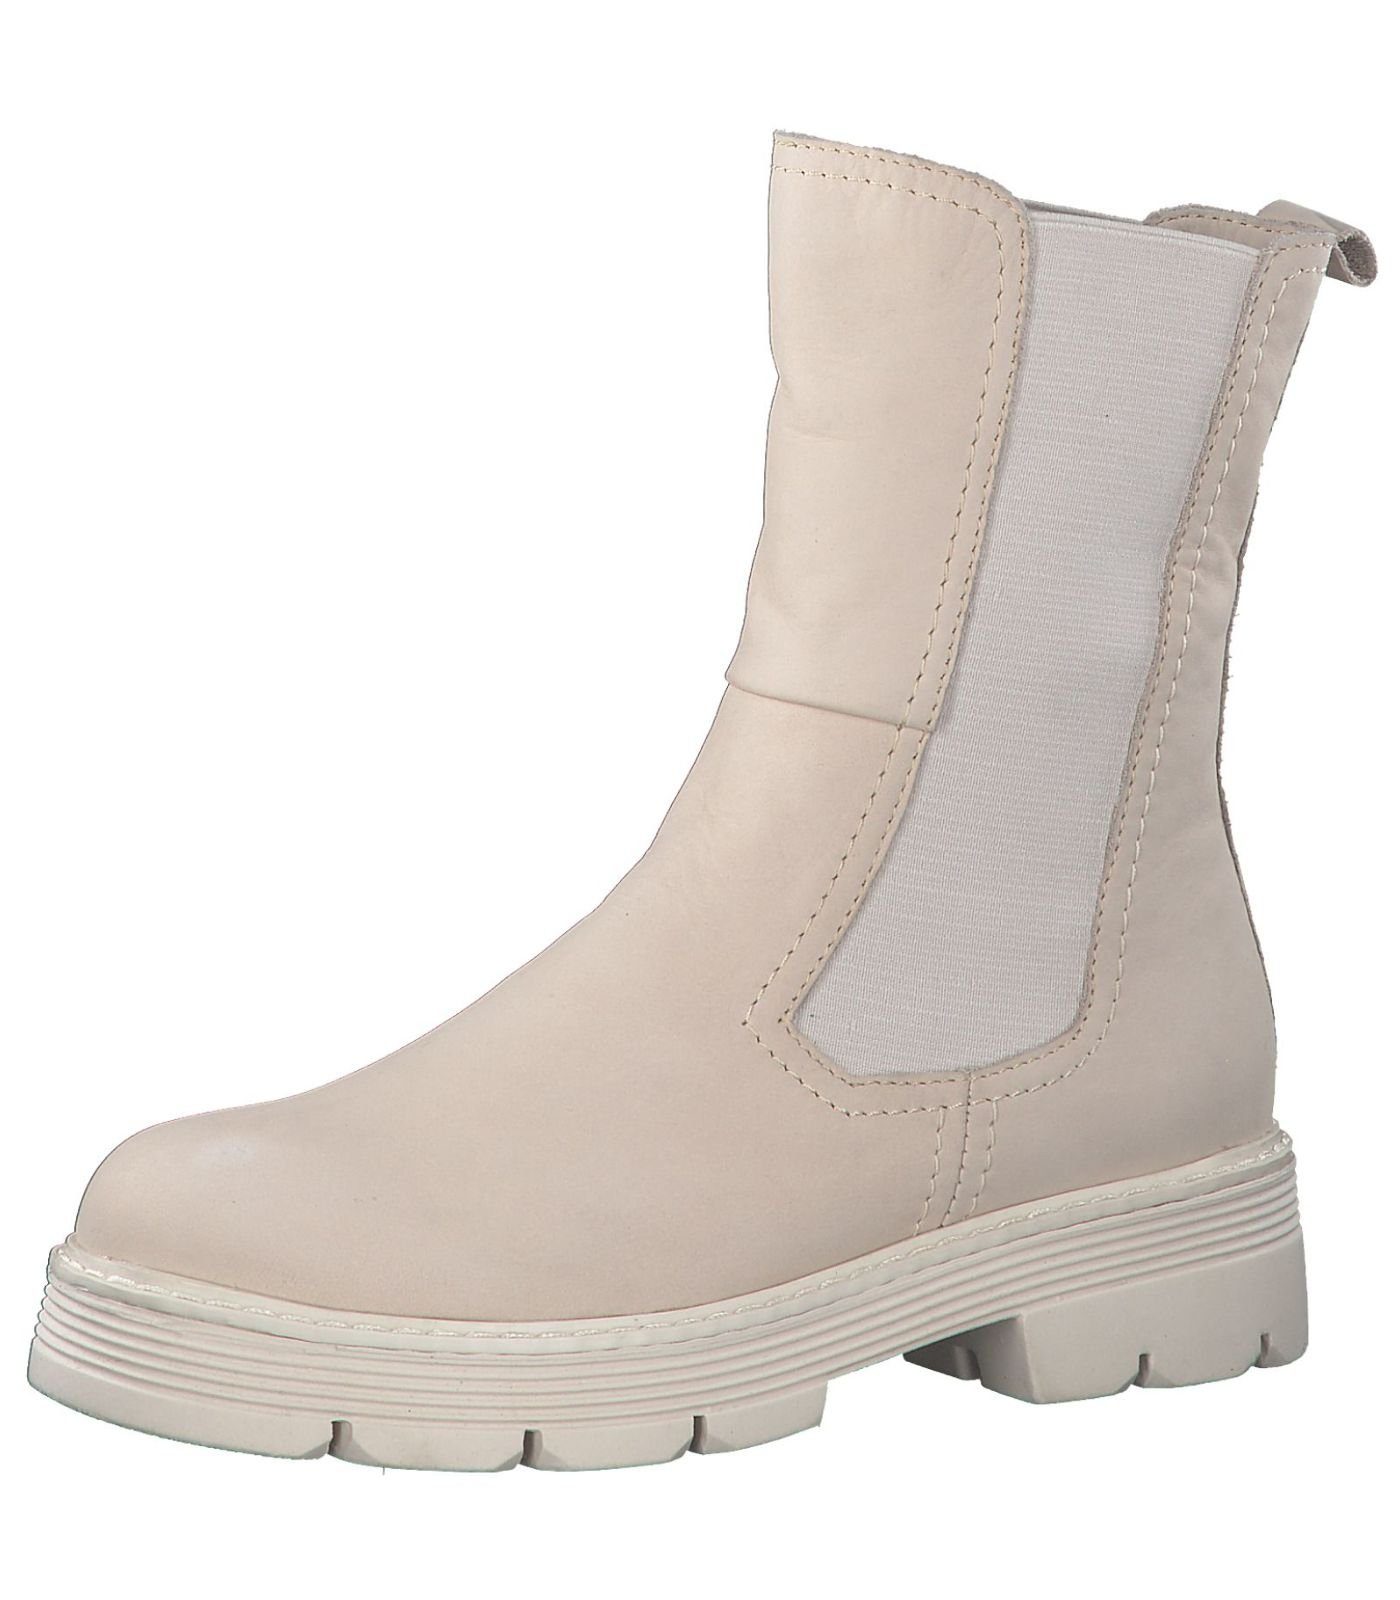 MARCO TOZZI Stiefel Leder/Textil Ankleboots Cream | Ankle Boots